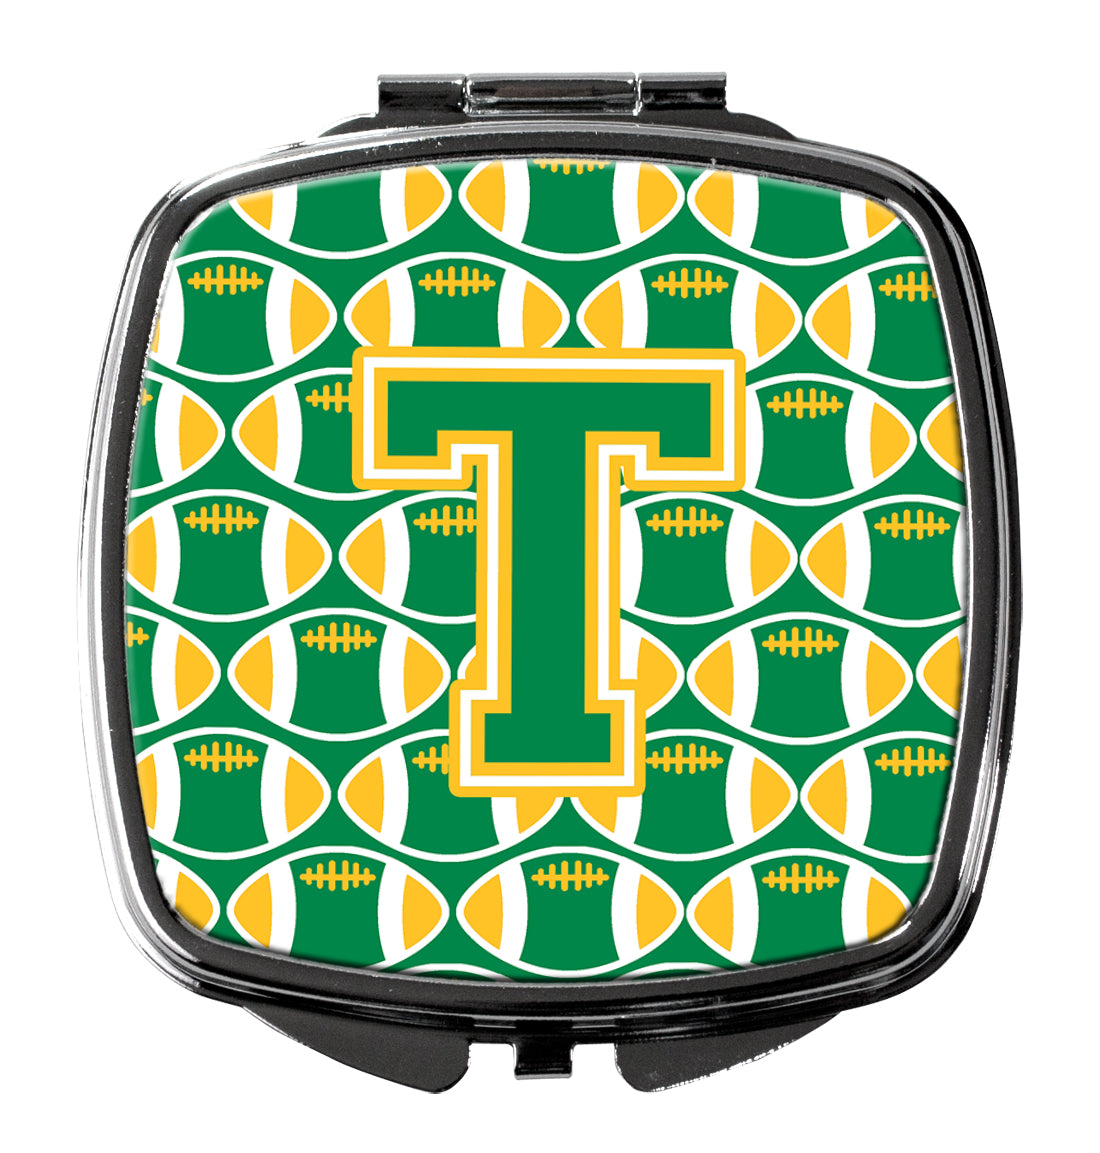 Miroir compact lettre T football vert et or CJ1069-TSCM